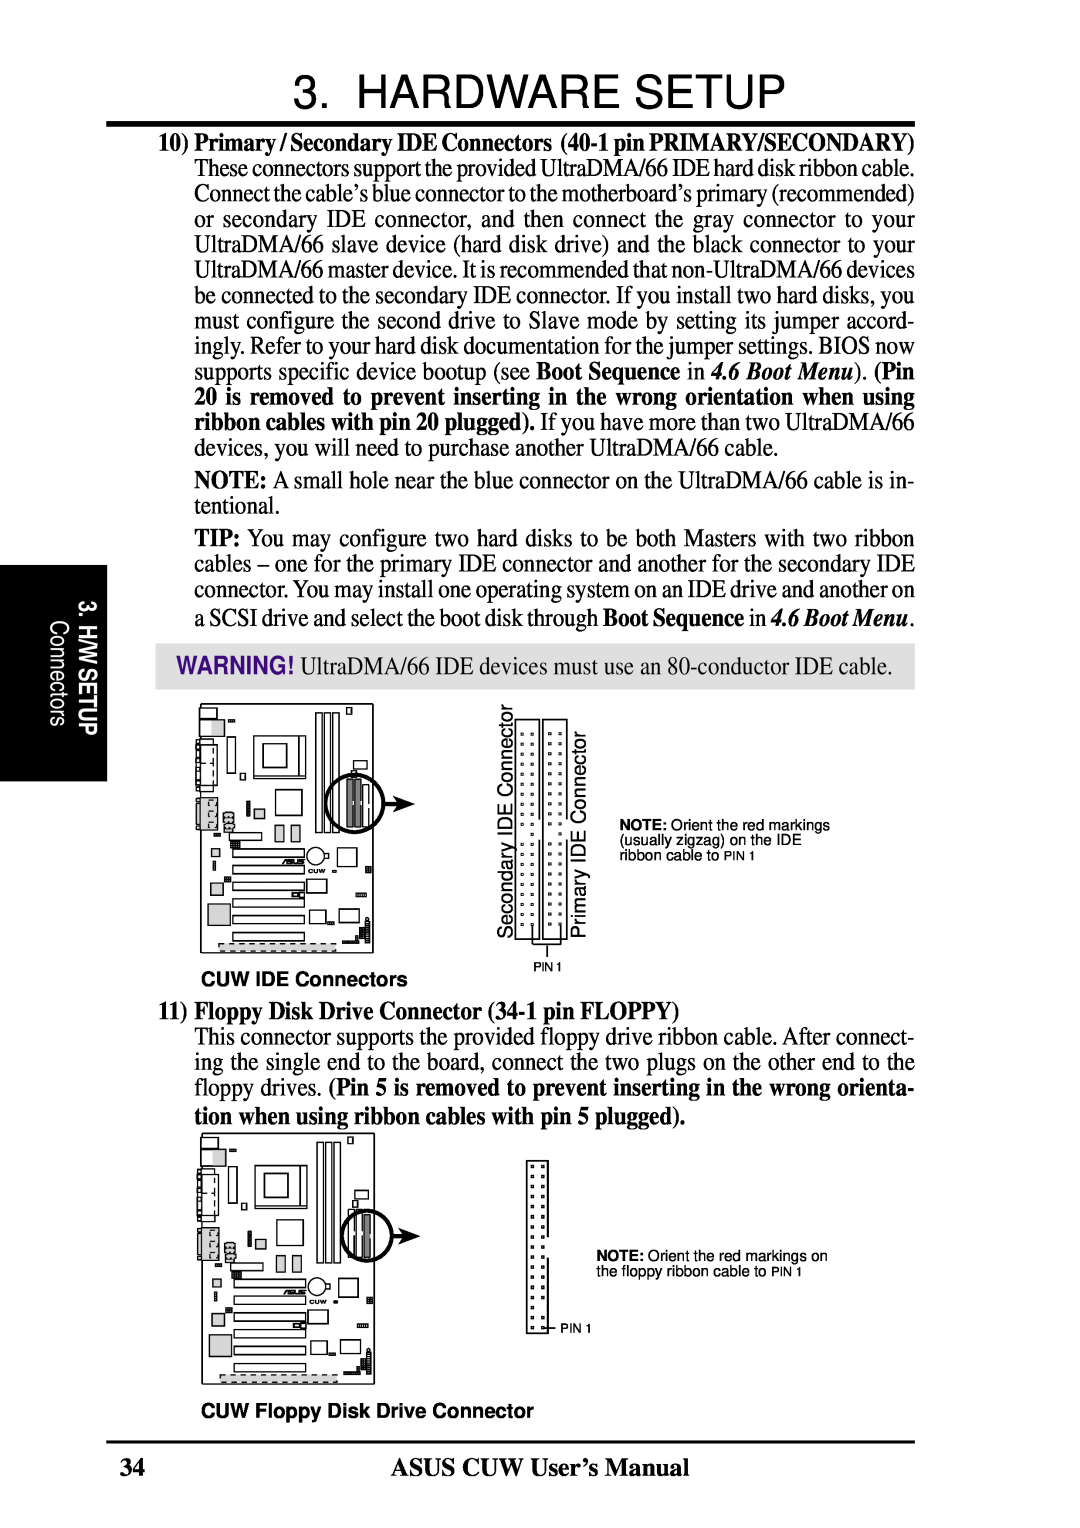 Asus 810 user manual Floppy Disk Drive Connector 34-1 pin FLOPPY, Hardware Setup, ASUS CUW User’s Manual 